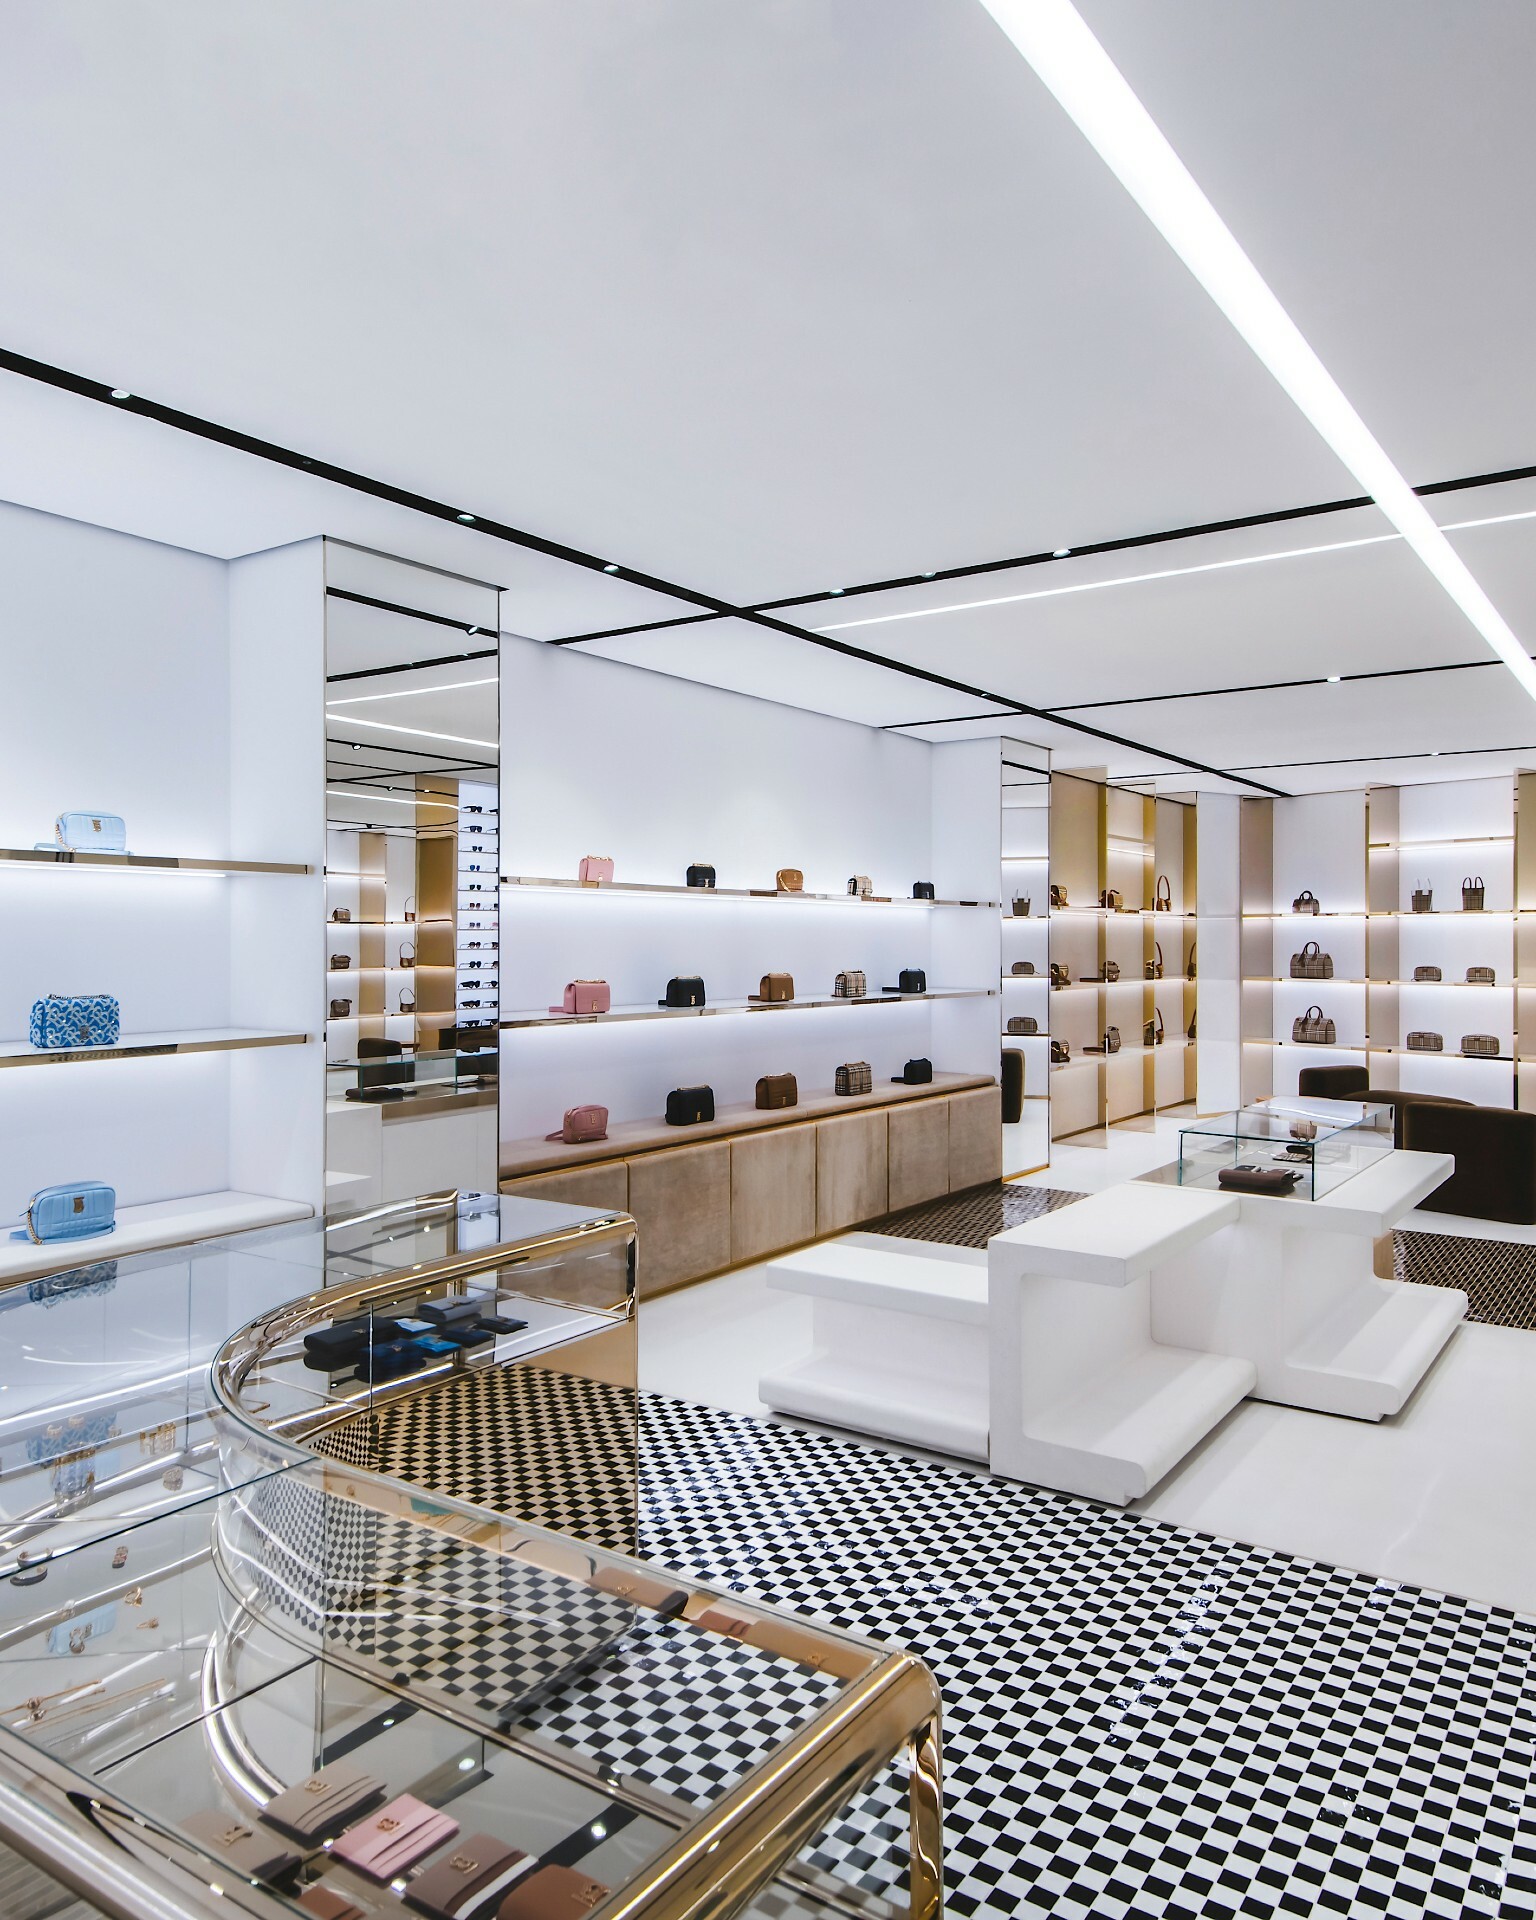 Louis Vuitton reopens New Bond Street after renovation